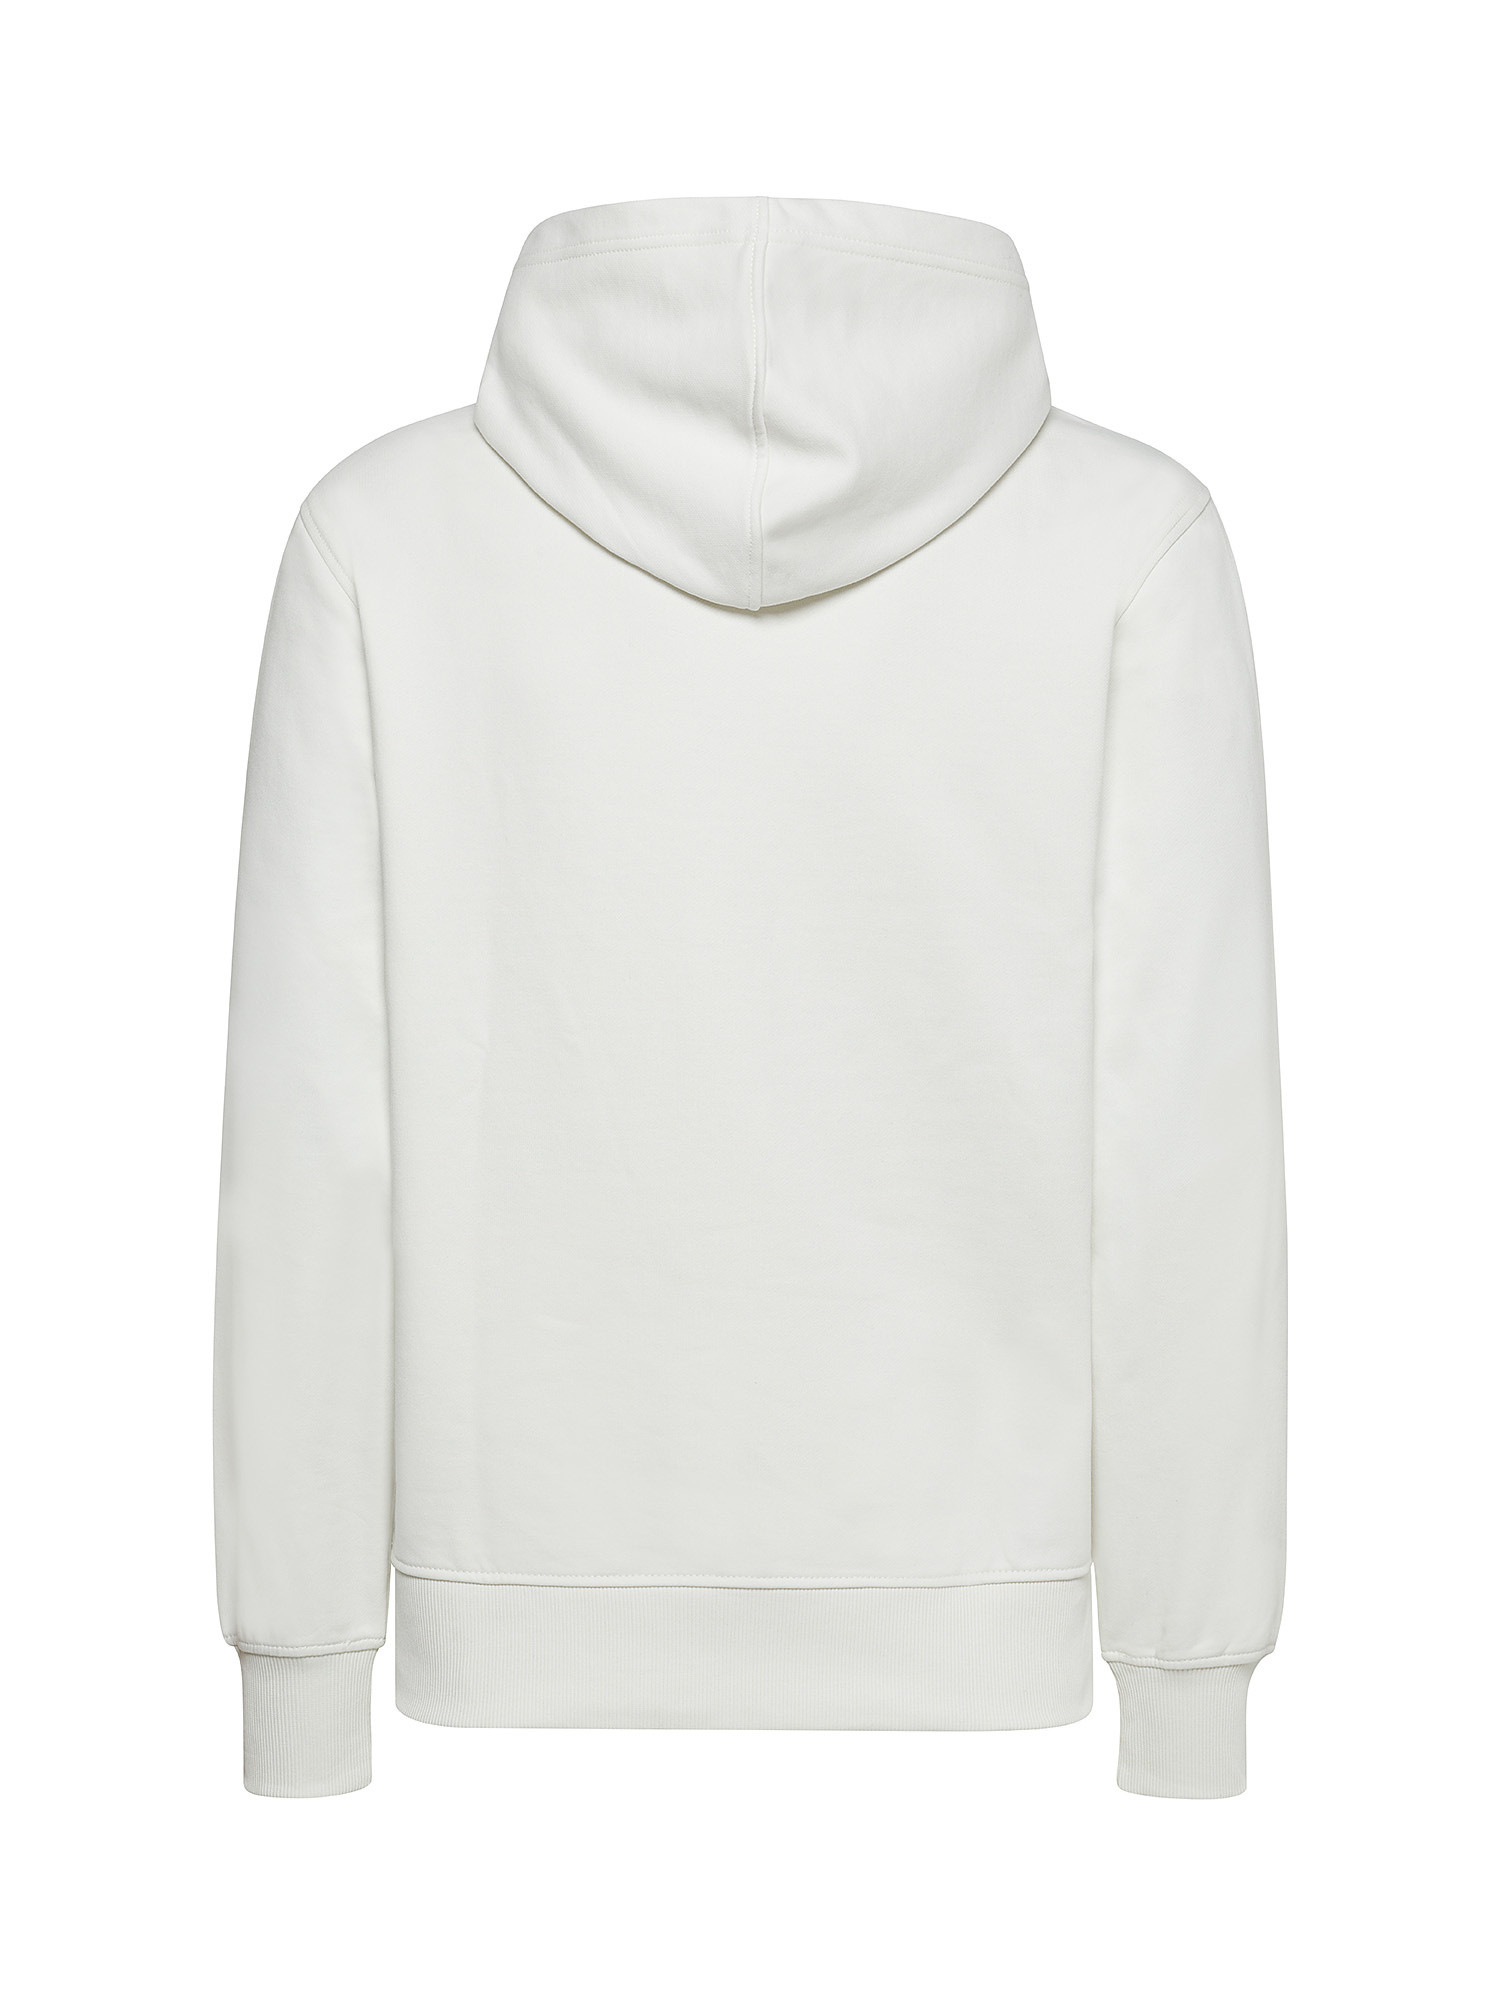 Calvin Klein Jeans -  Felpa con cappuccio in cotone  con logo, Bianco, large image number 1